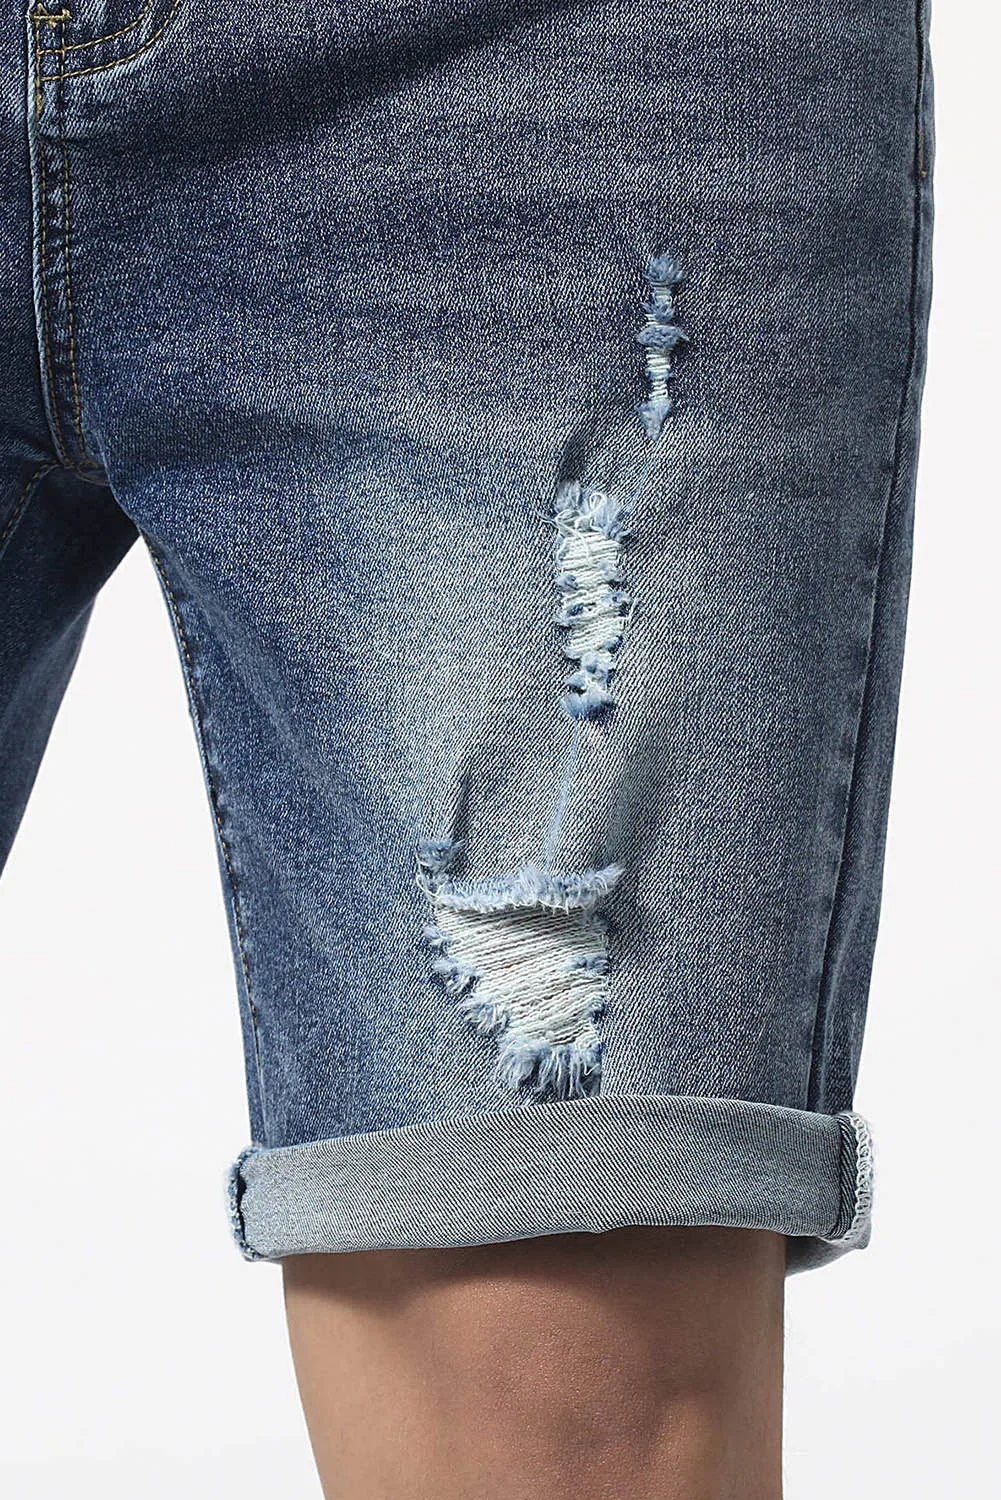 Dear-Lover Cotton Casual Street Slim-Fit Distressed Denim Men's Jean Shorts